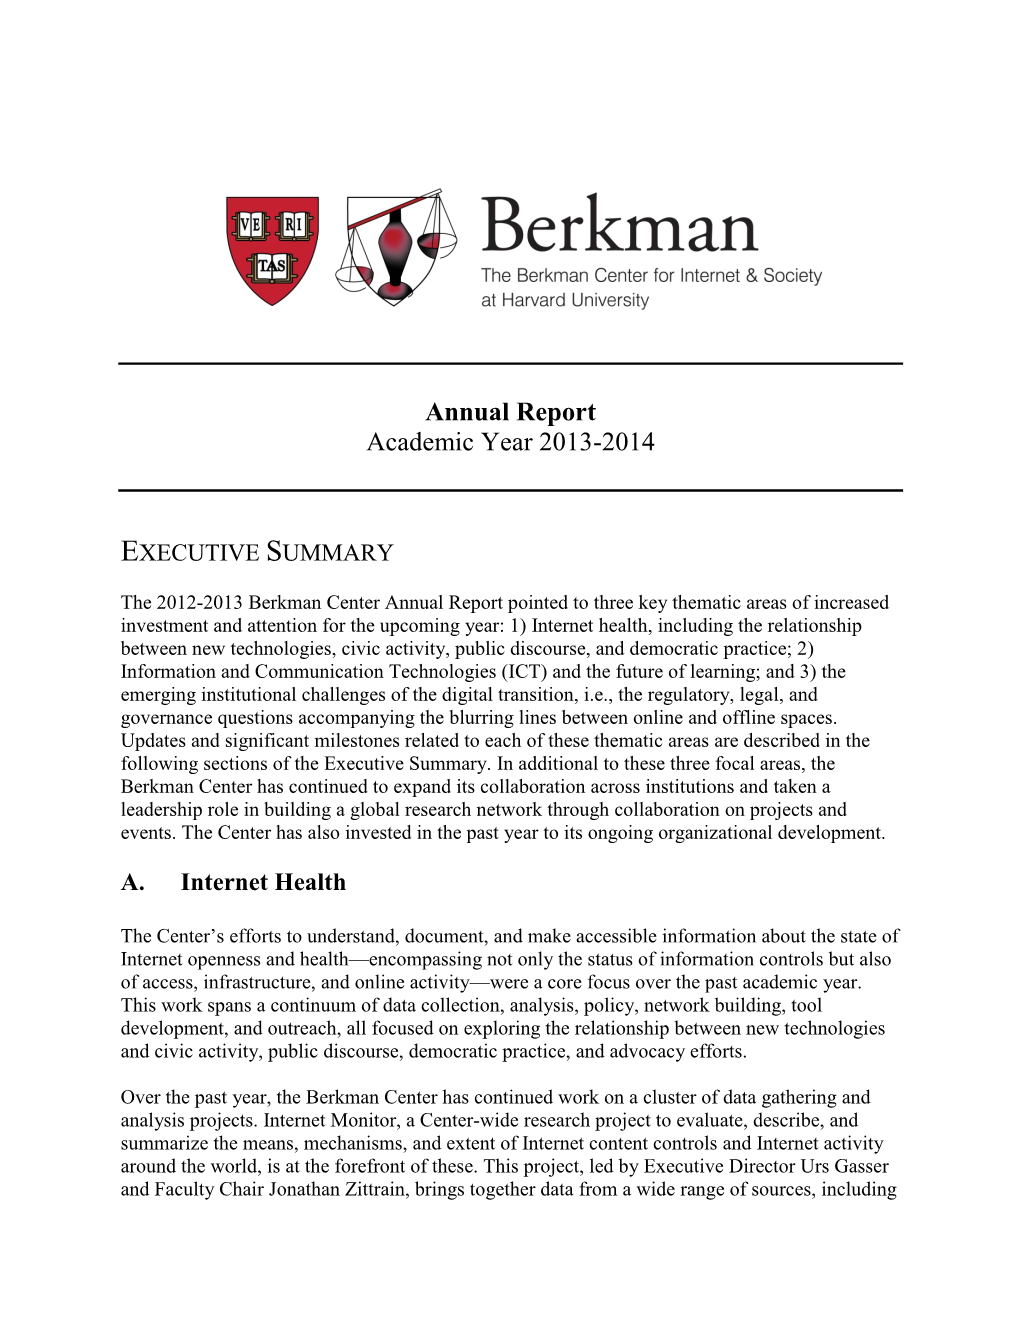 Berkman Center Annual Report 2014-2015